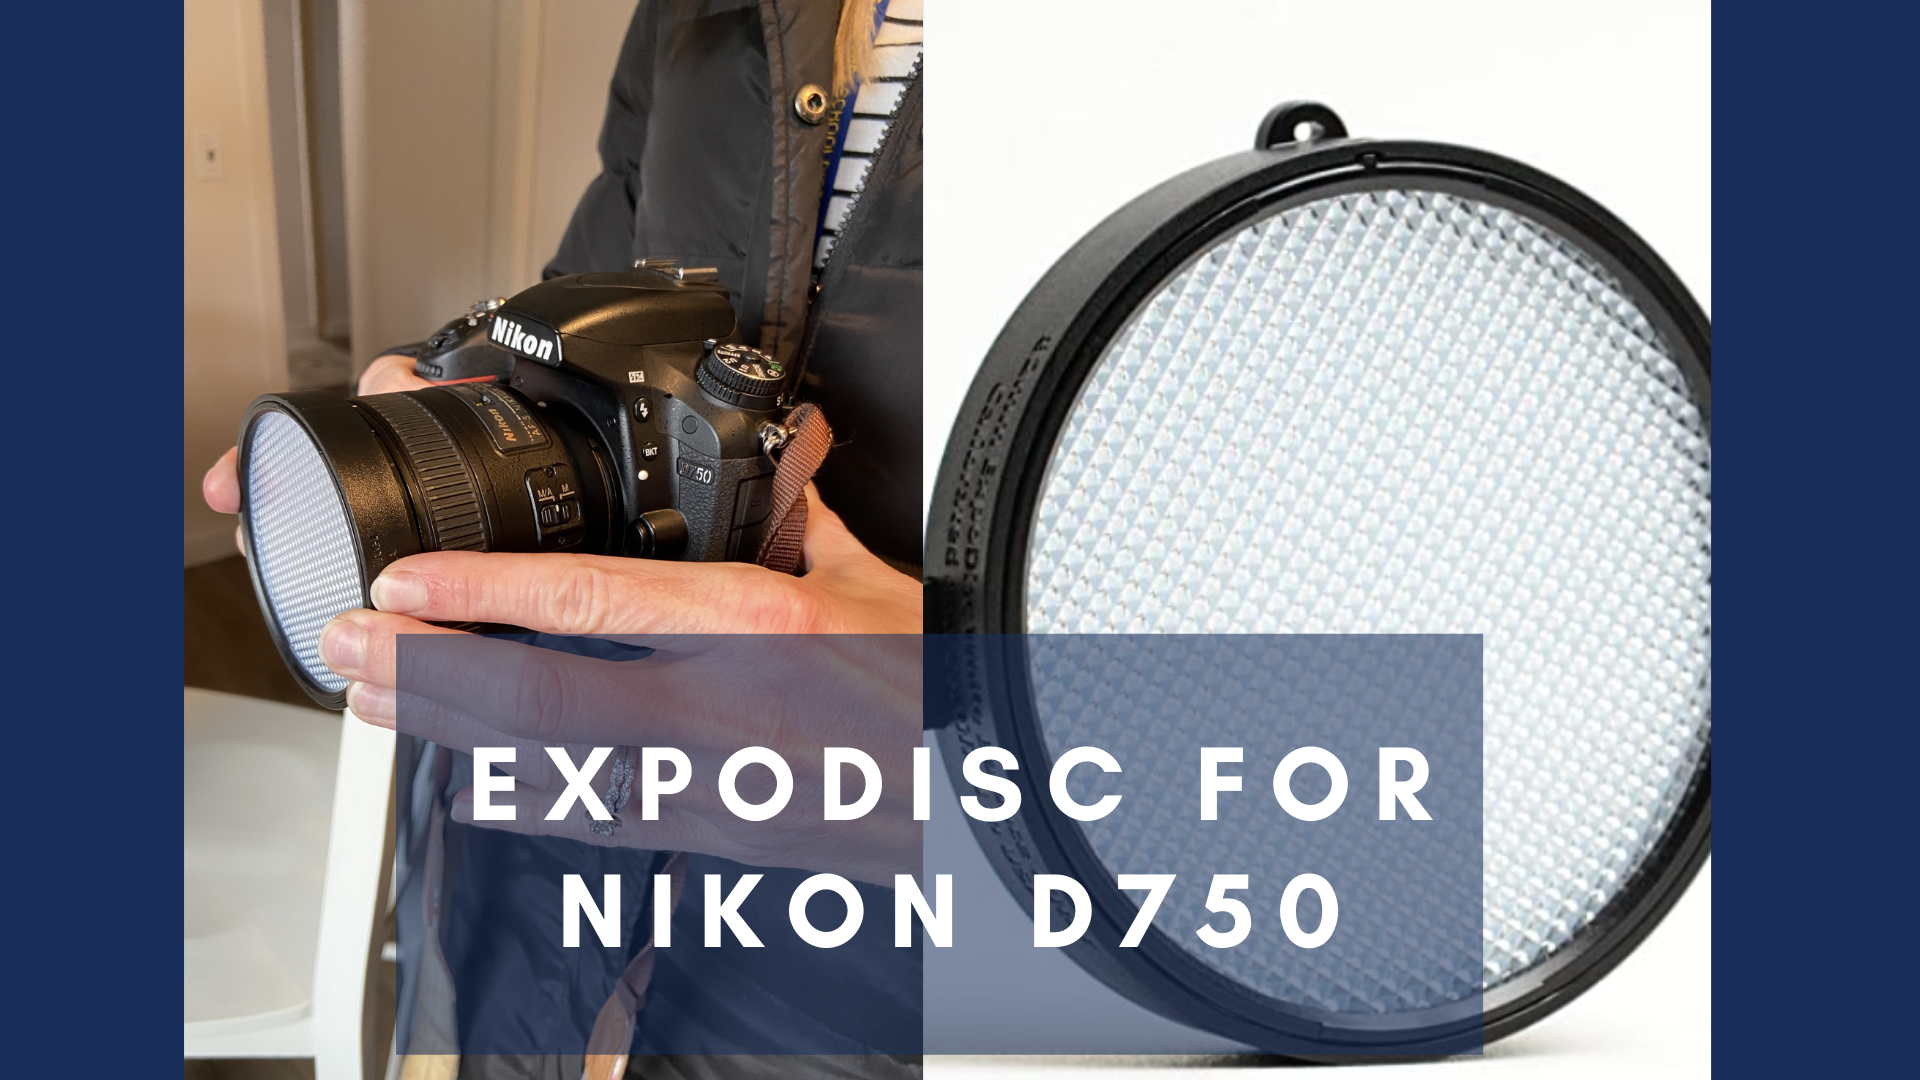 NIkon D750 Expodisc Tutorial